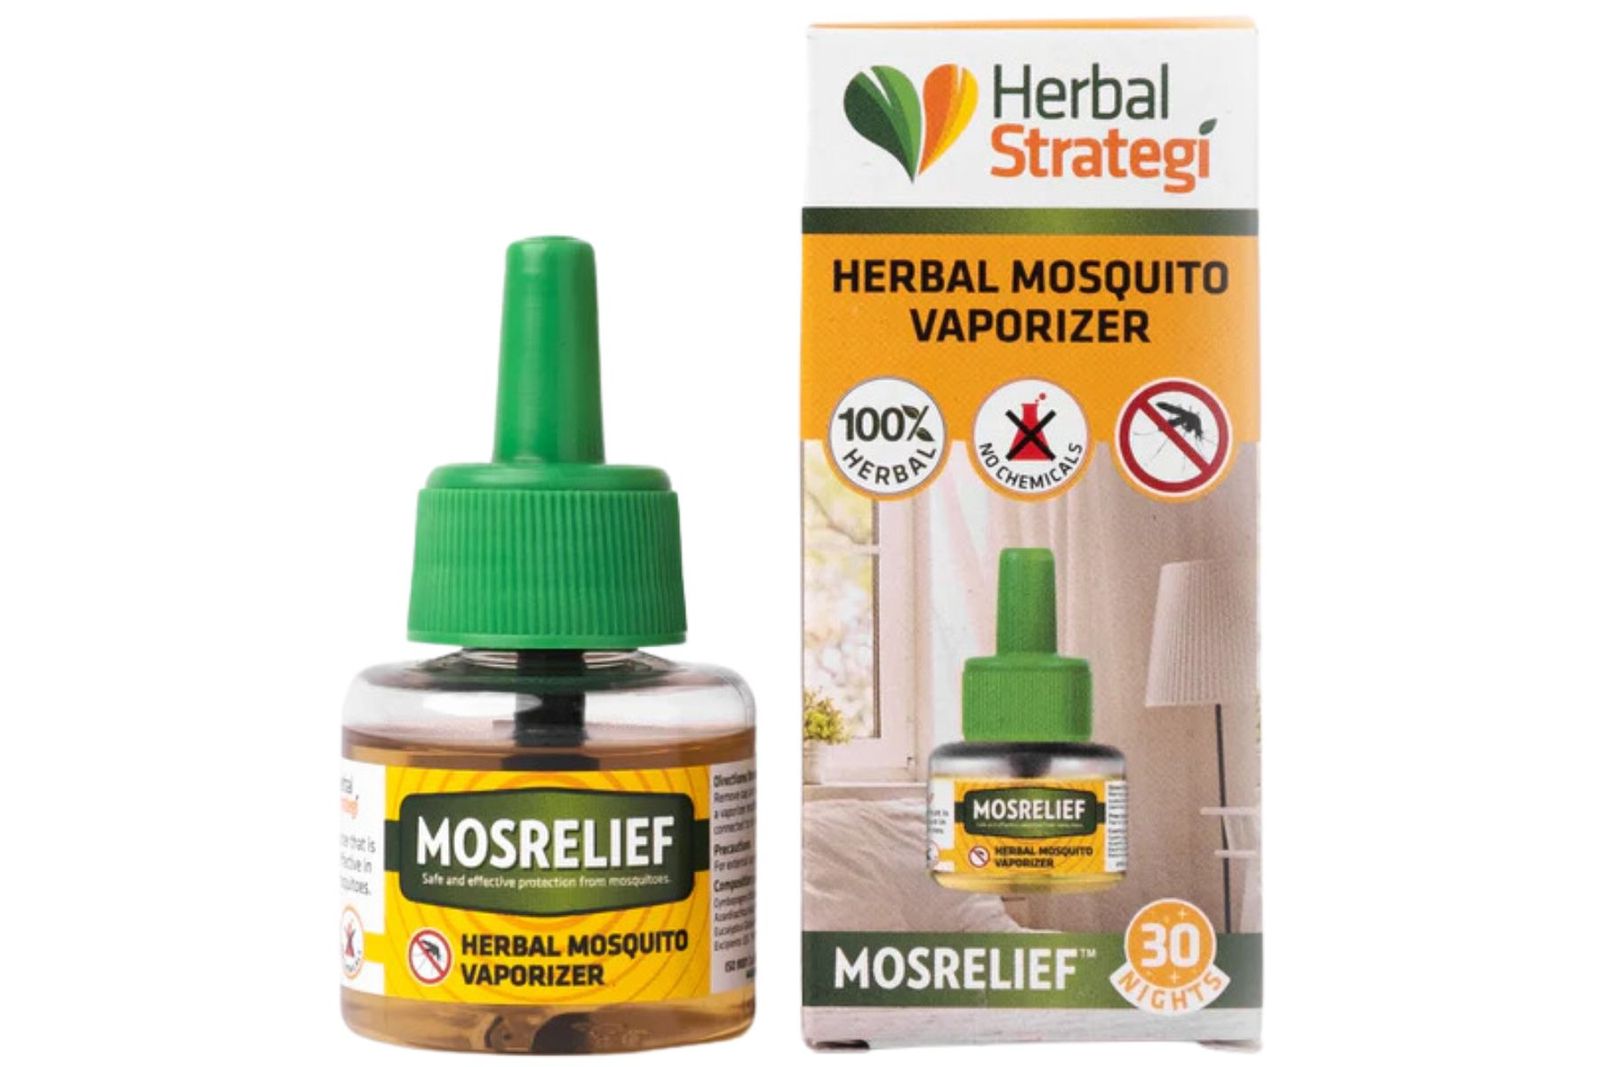 Herbal Strategi Herbal Mosquito Vaporizer Mosrelief